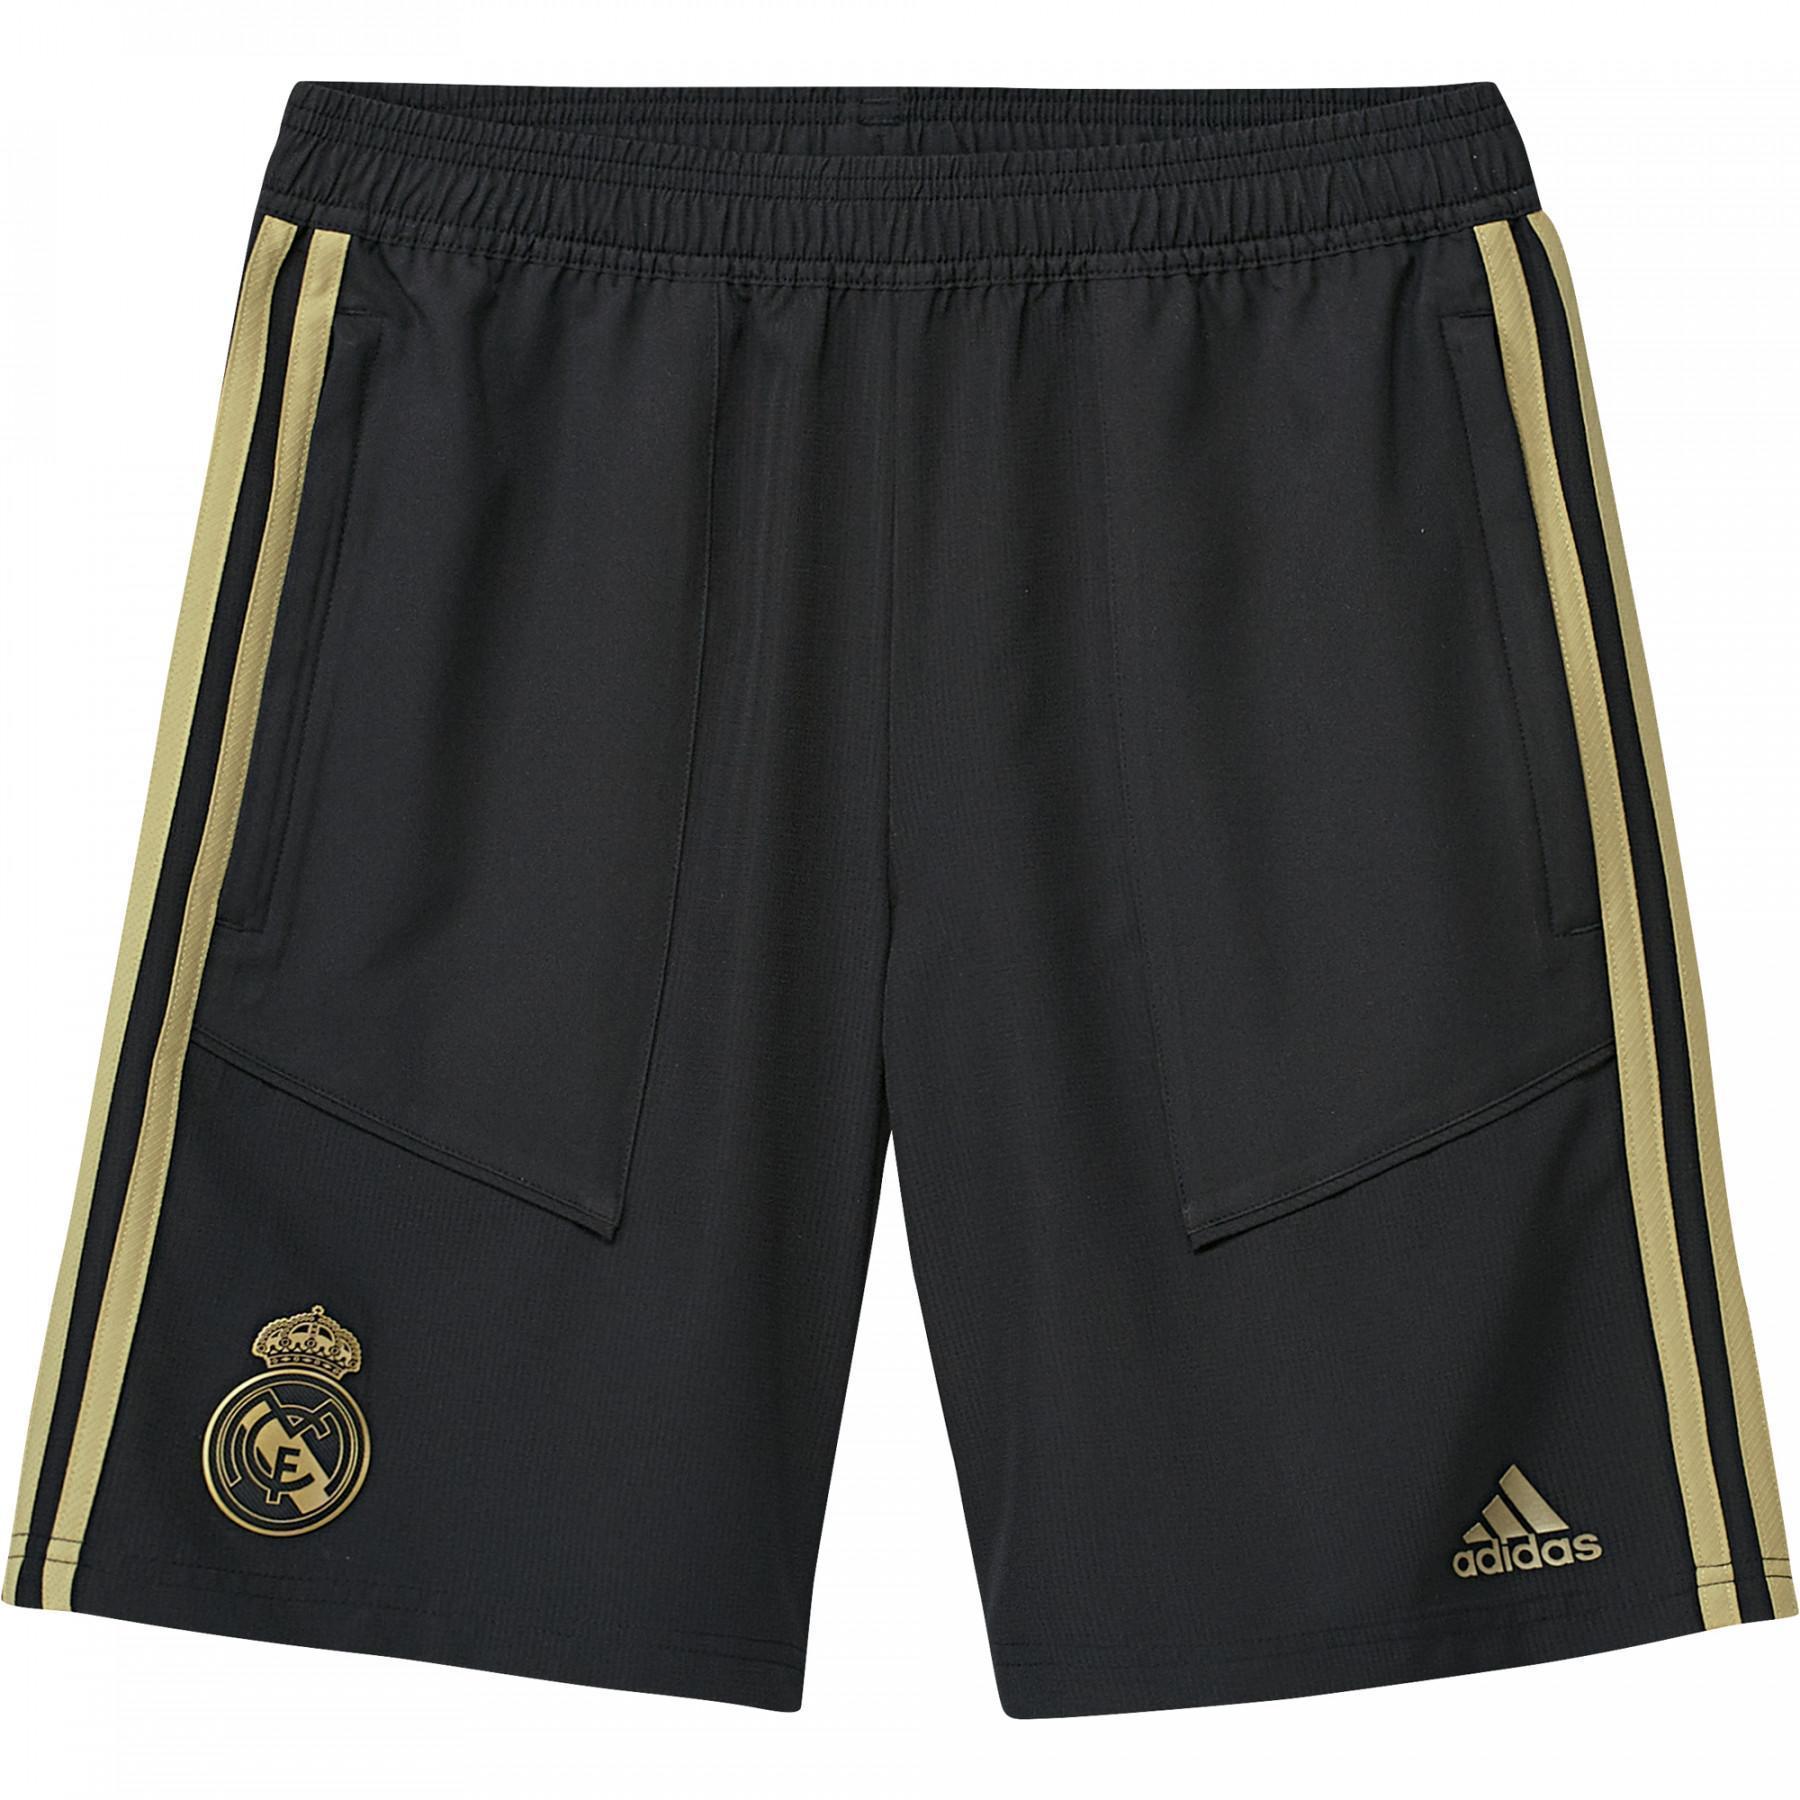 Children's shorts Real Madrid 2019/20